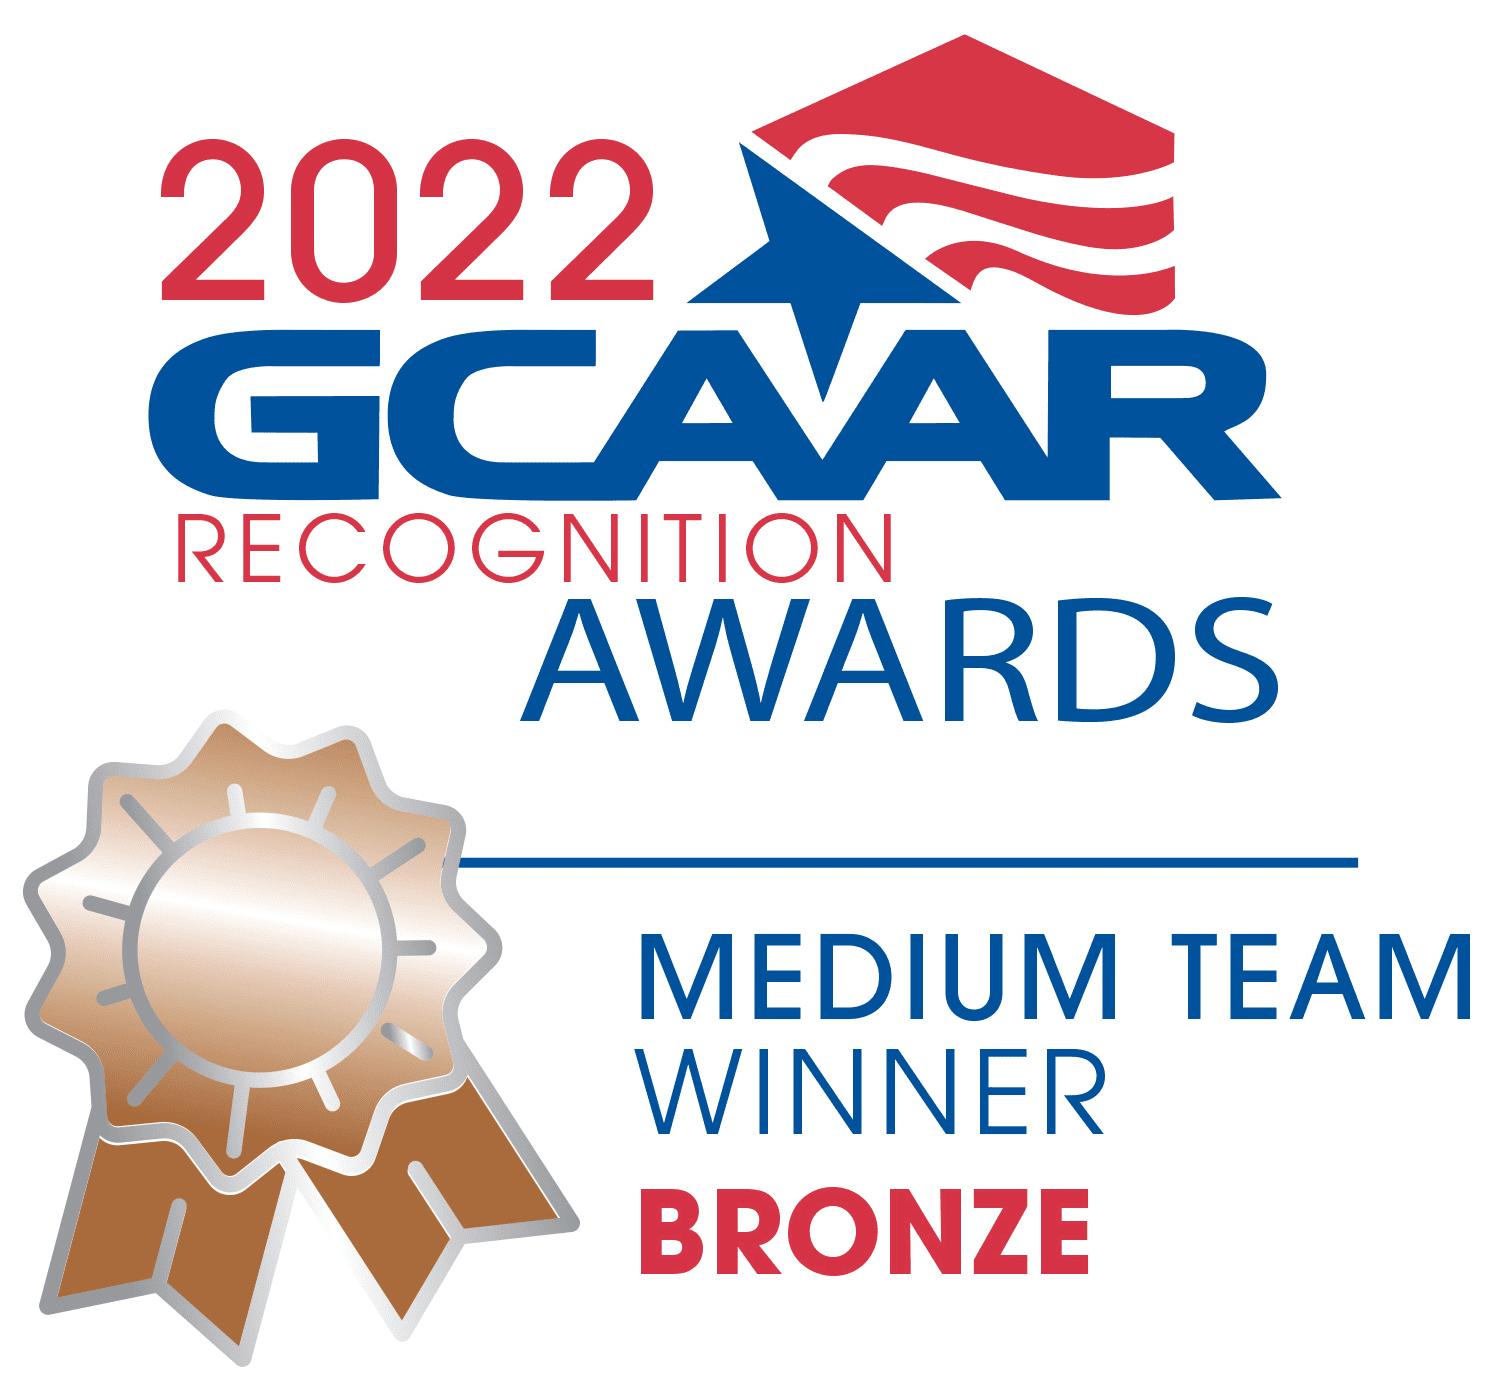 GCARR award 2022